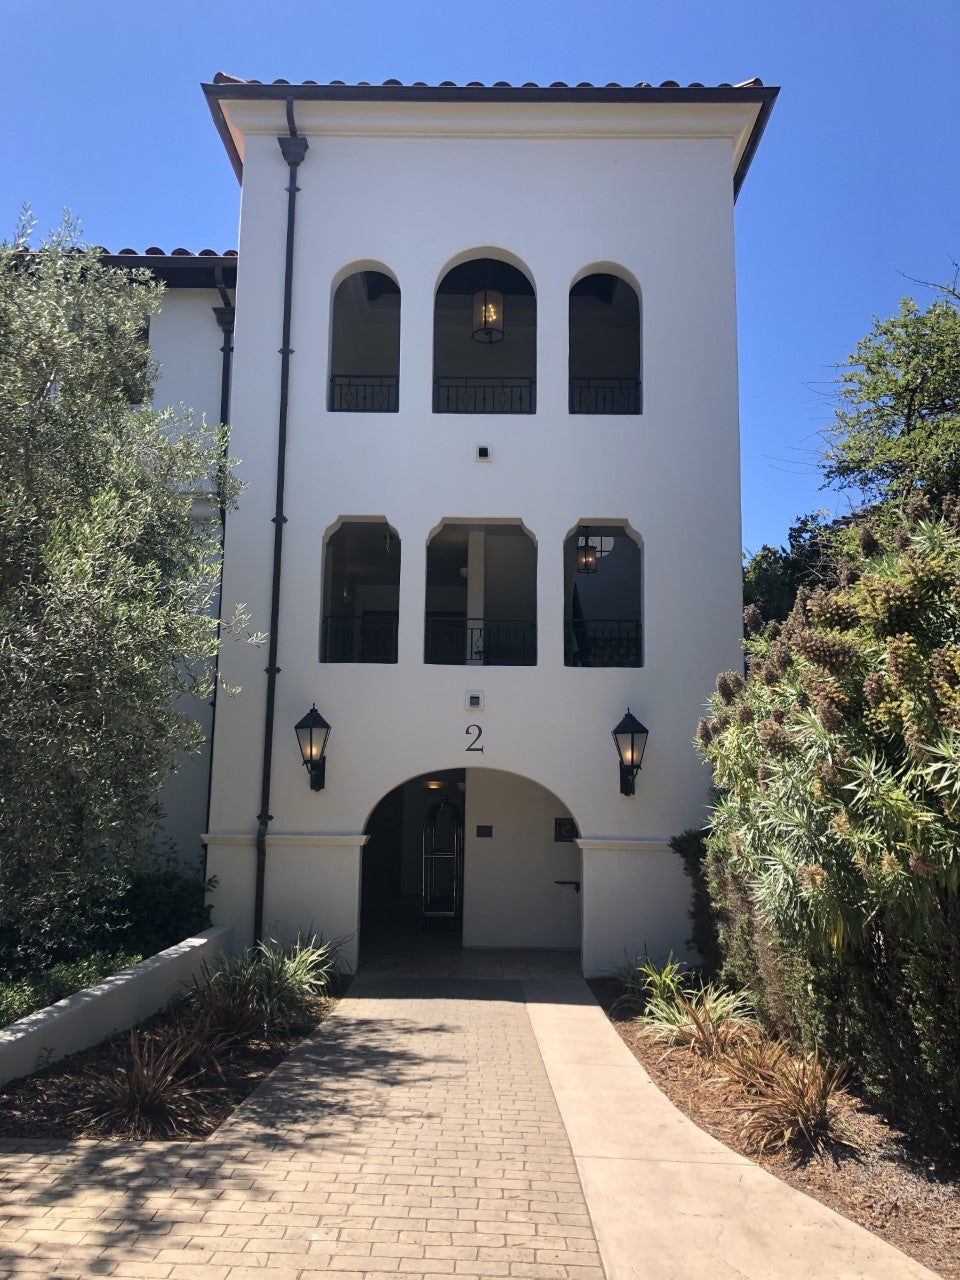 The Ritz-Carlton Bacara, Santa Barbara Bacara villa